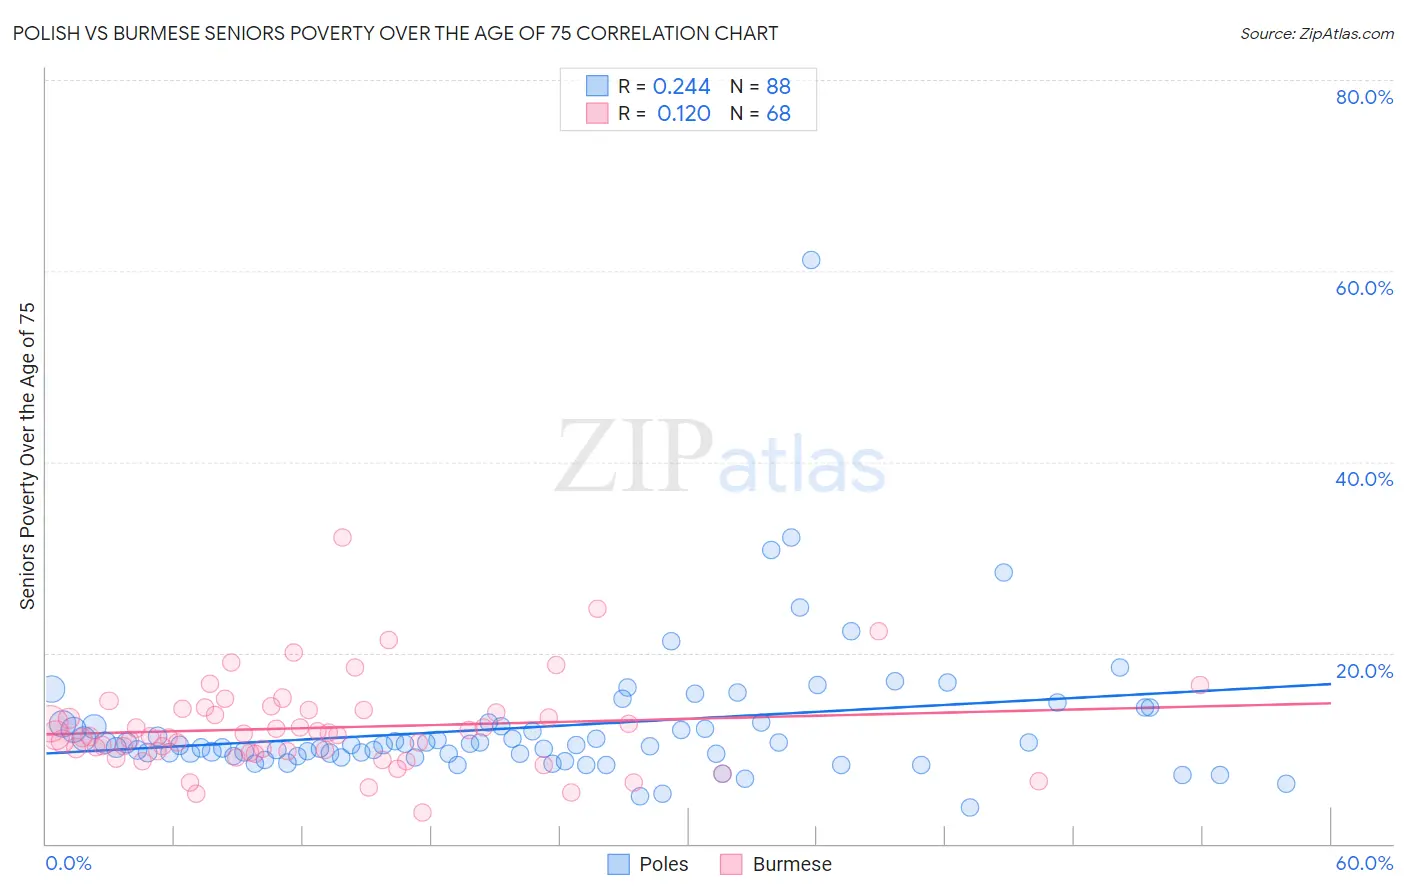 Polish vs Burmese Seniors Poverty Over the Age of 75